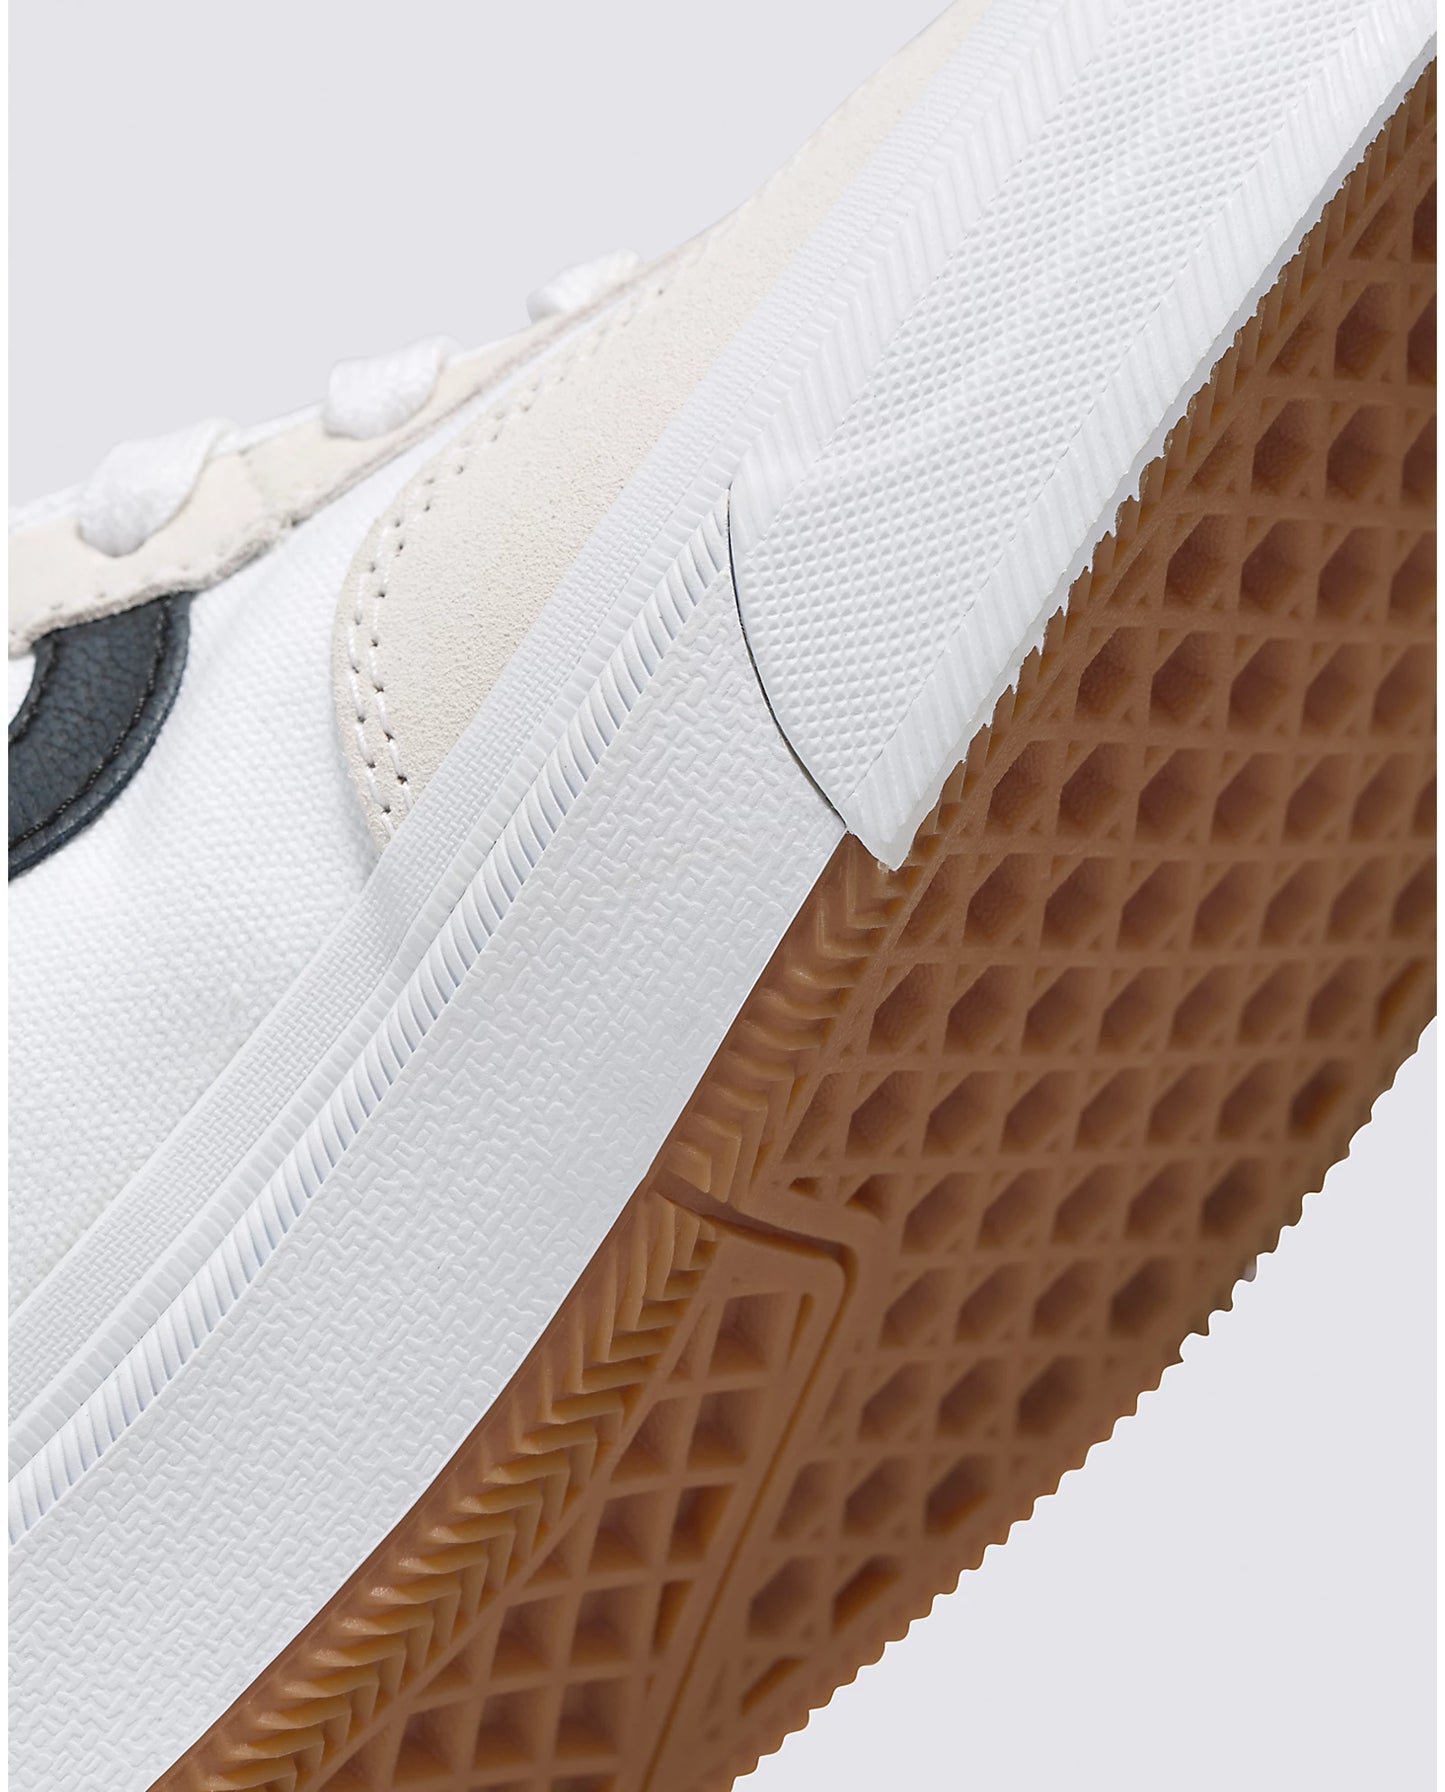 Crockett High Pro Shoe Wht/Blk/Gum(size options listed)